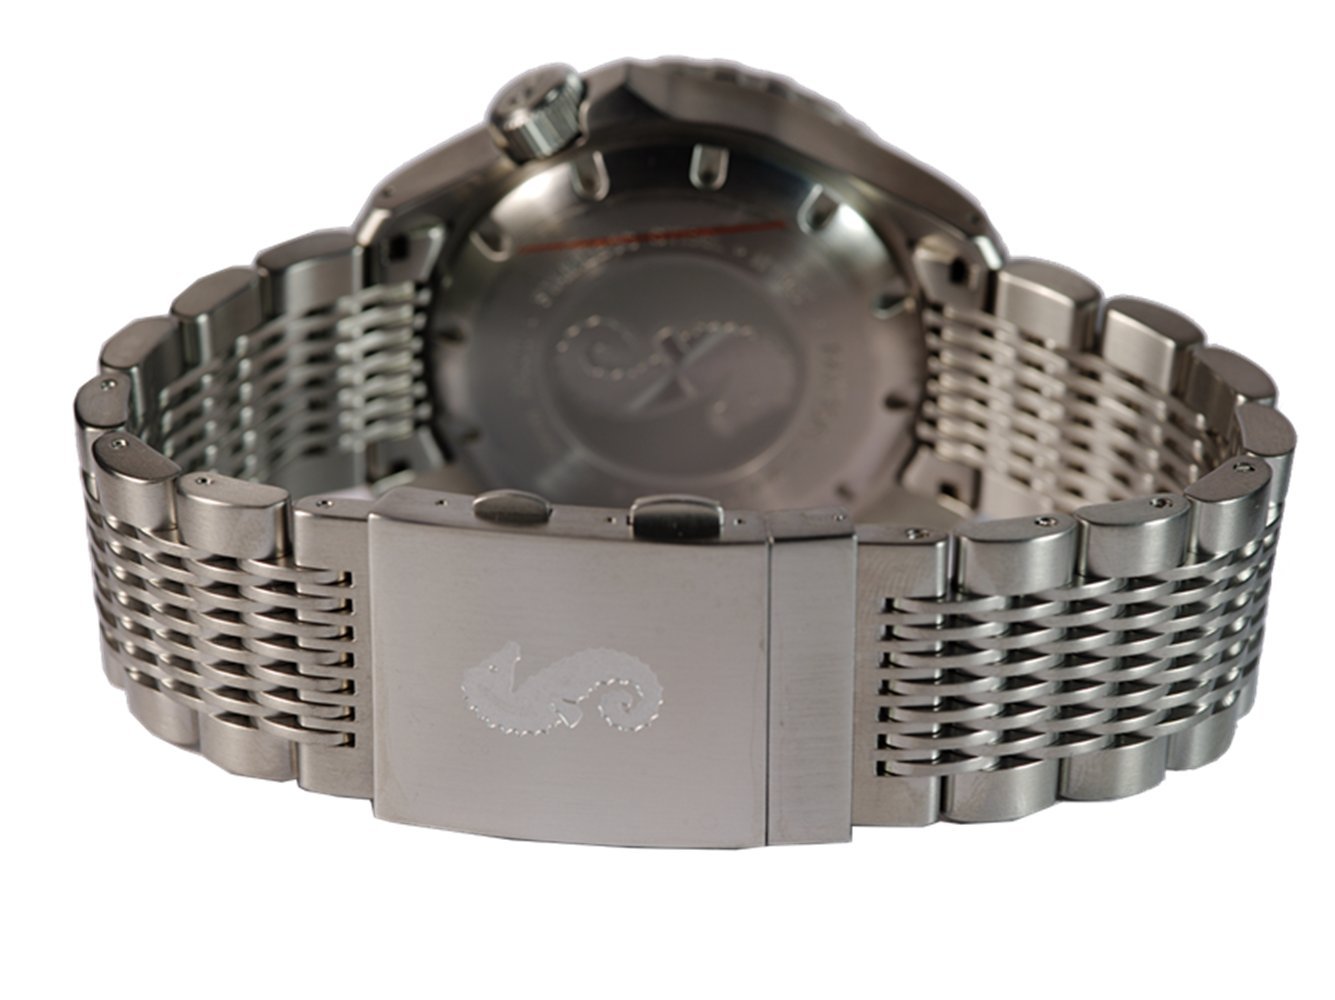 Pantor Seahorse Dive Watch,1000m Auotmatic Diver Watches,Big 45mm Watch Men